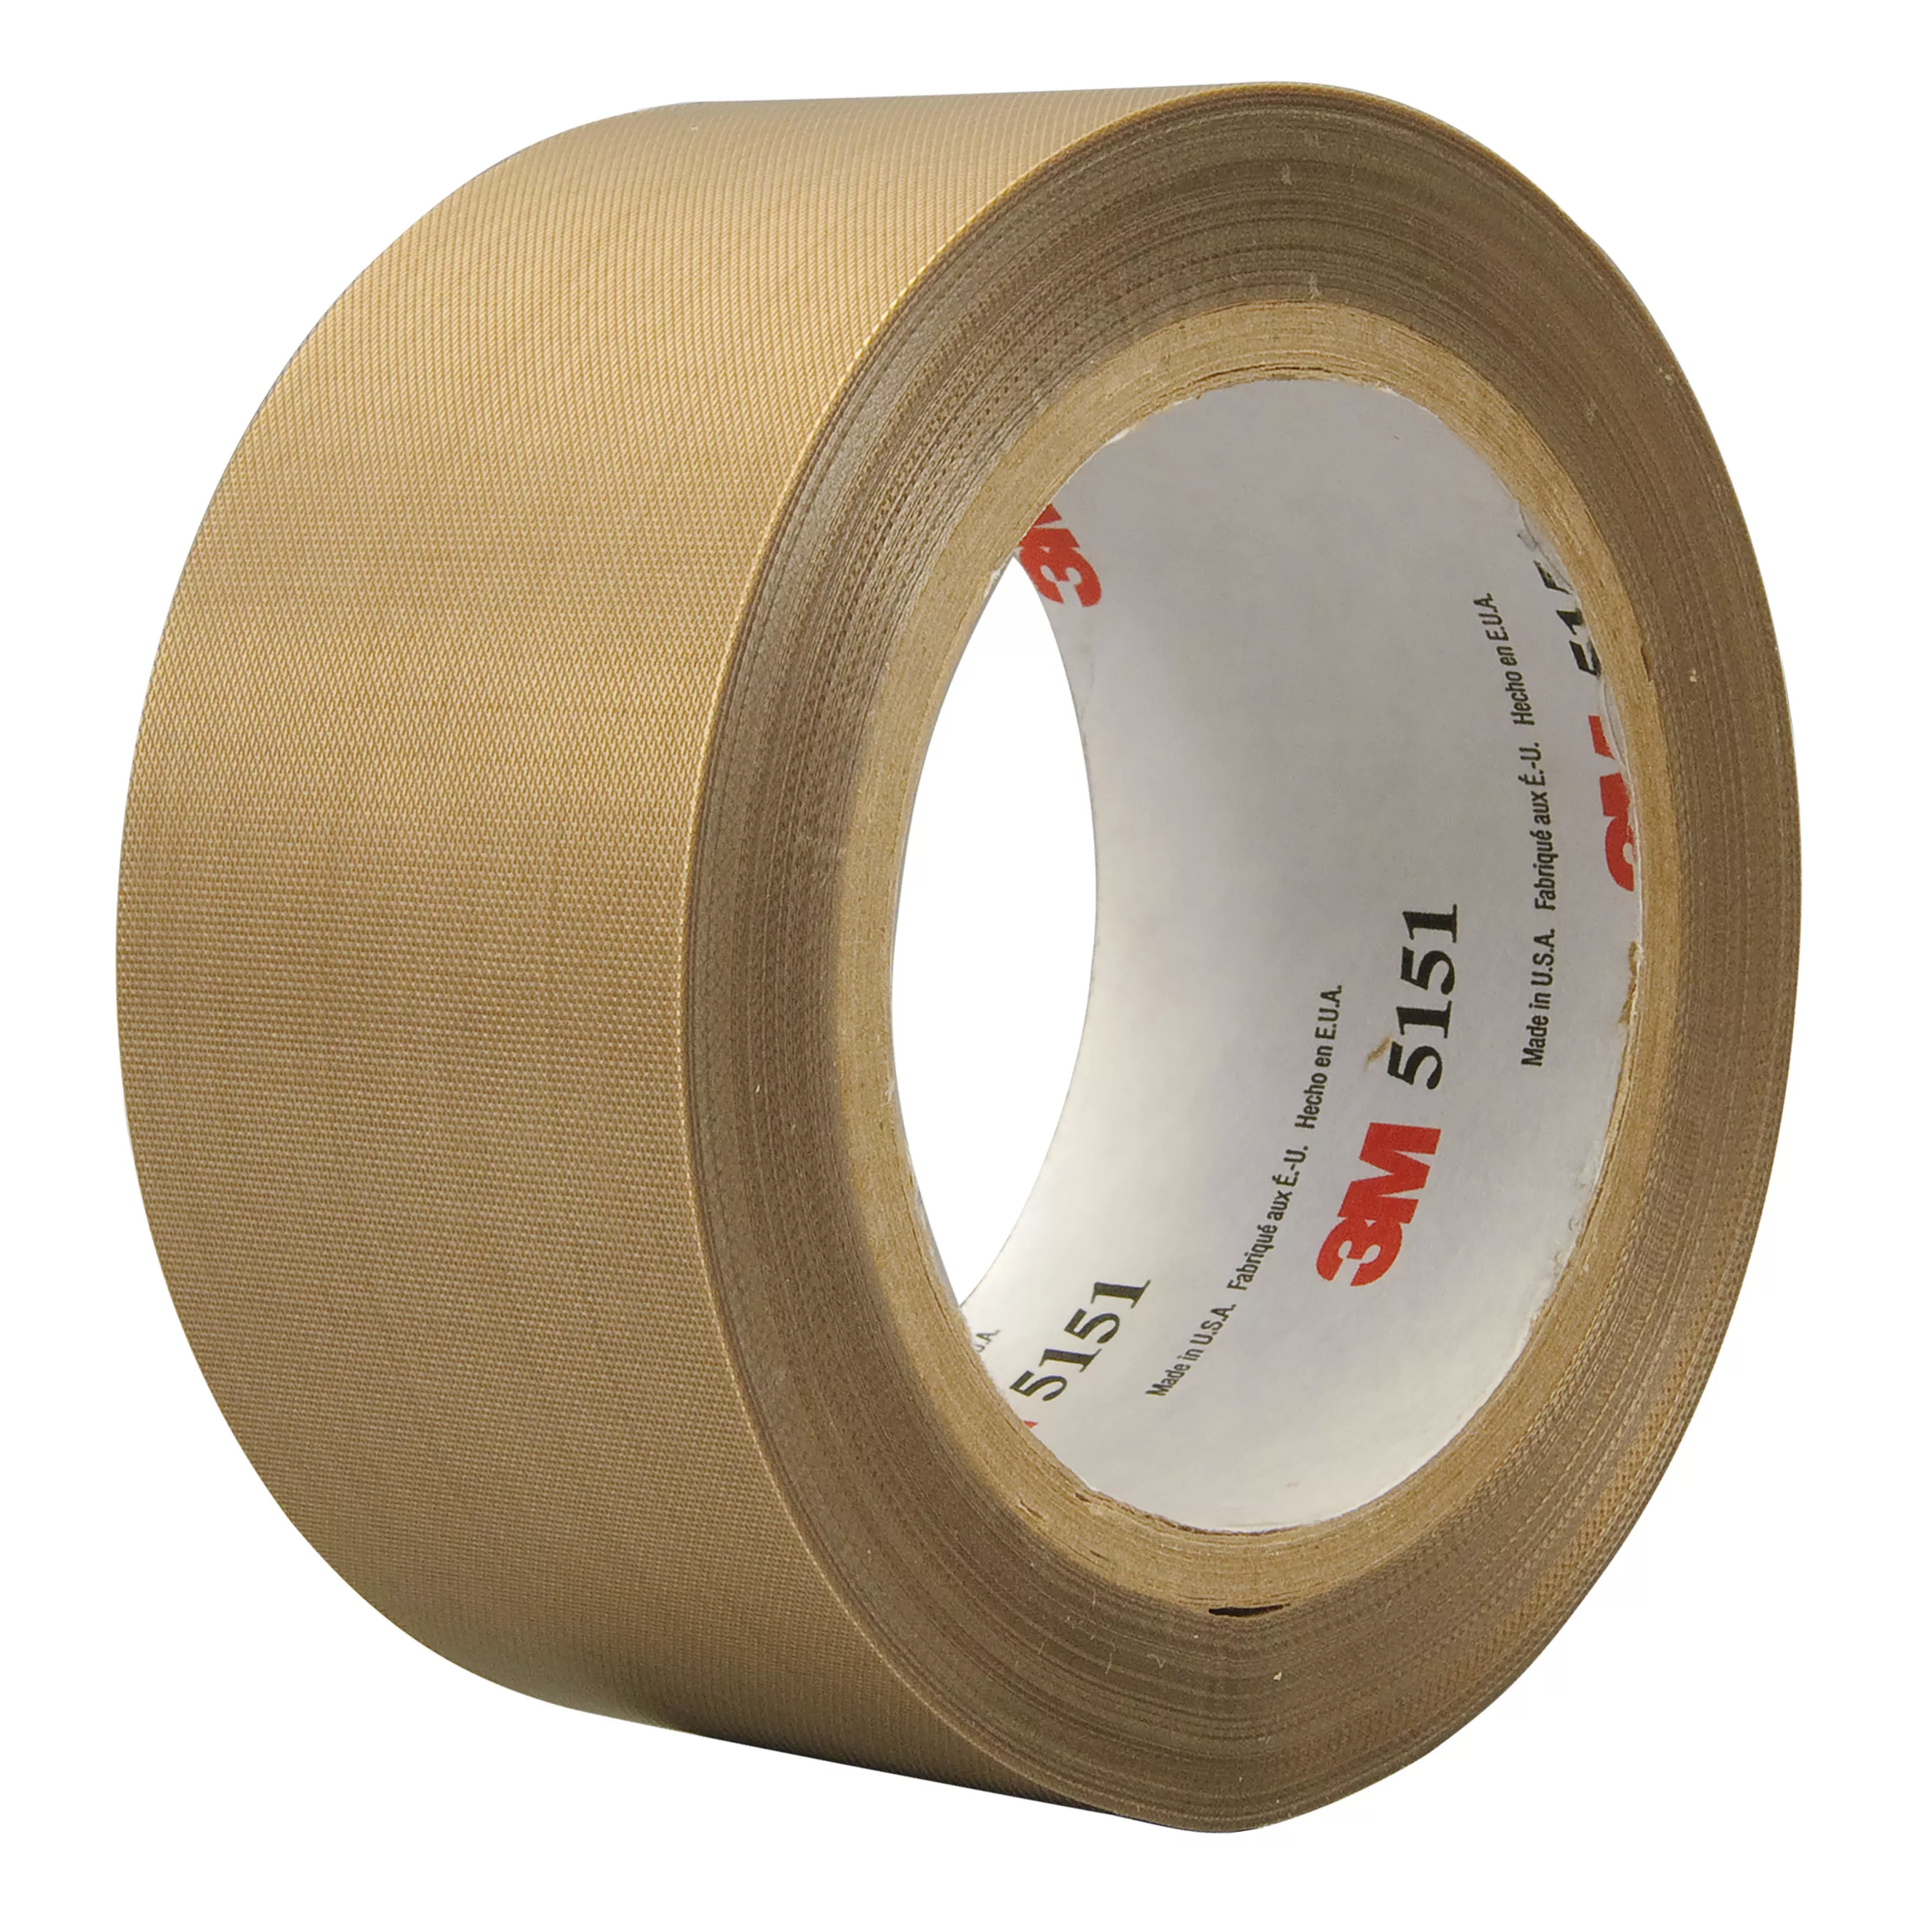 3M™ General Purpose PTFE Glass Cloth Tape 5151, Light Brown, 2 in x 36
yd, 24 rolls per case